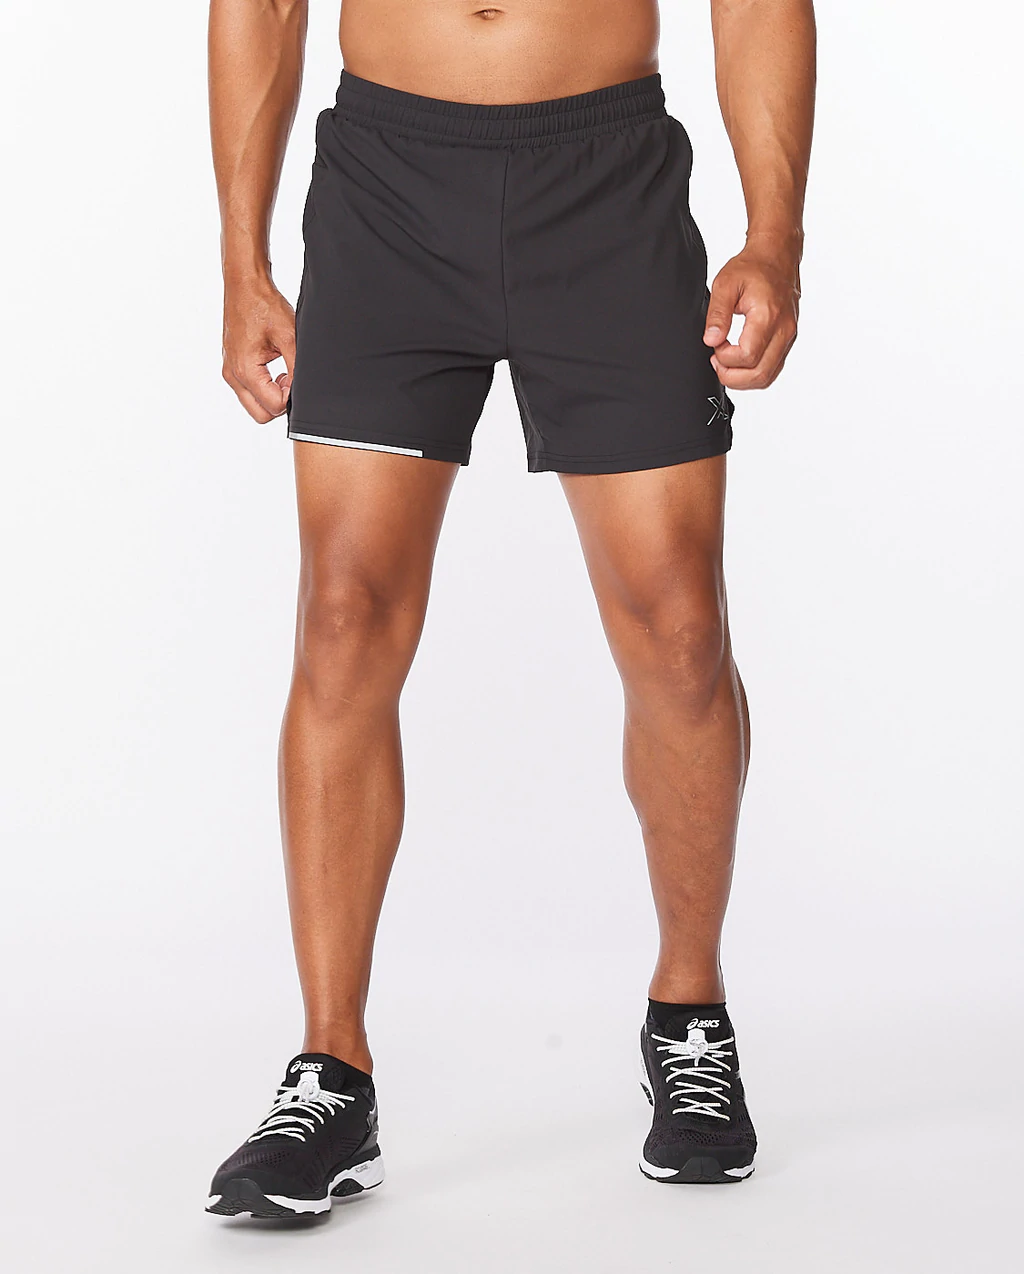 2XU Men's Aero 5 Inch Shorts Black/Silver